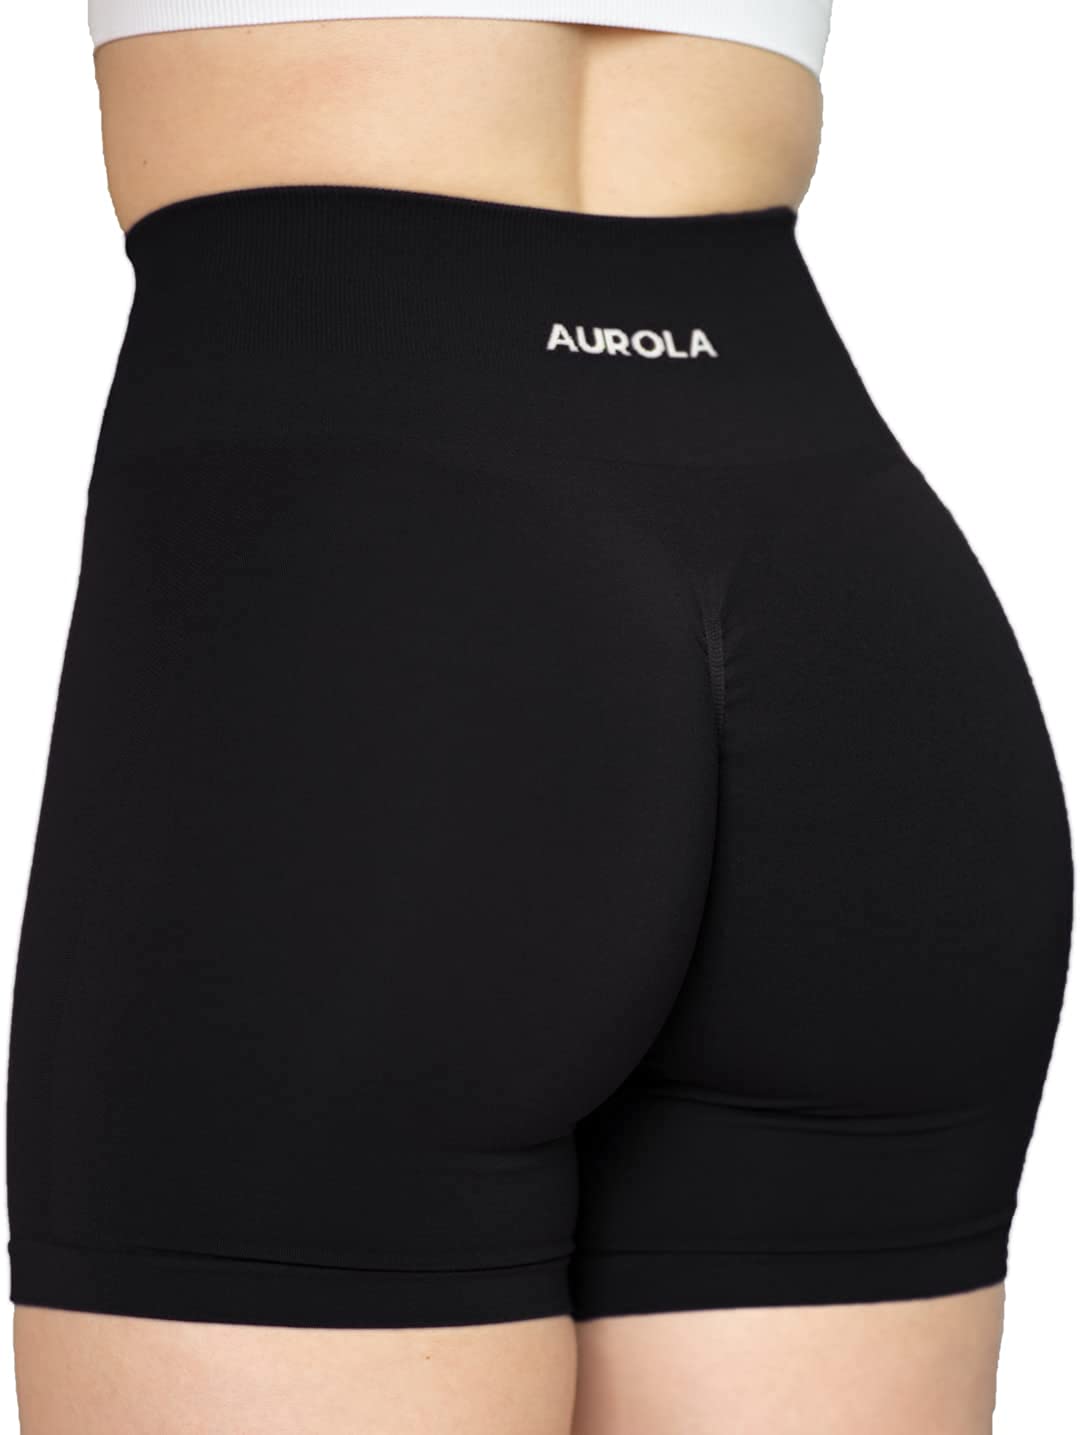 YEOREO Daze Workout Shorts Womens Scrunch Butt Gym Shorts for